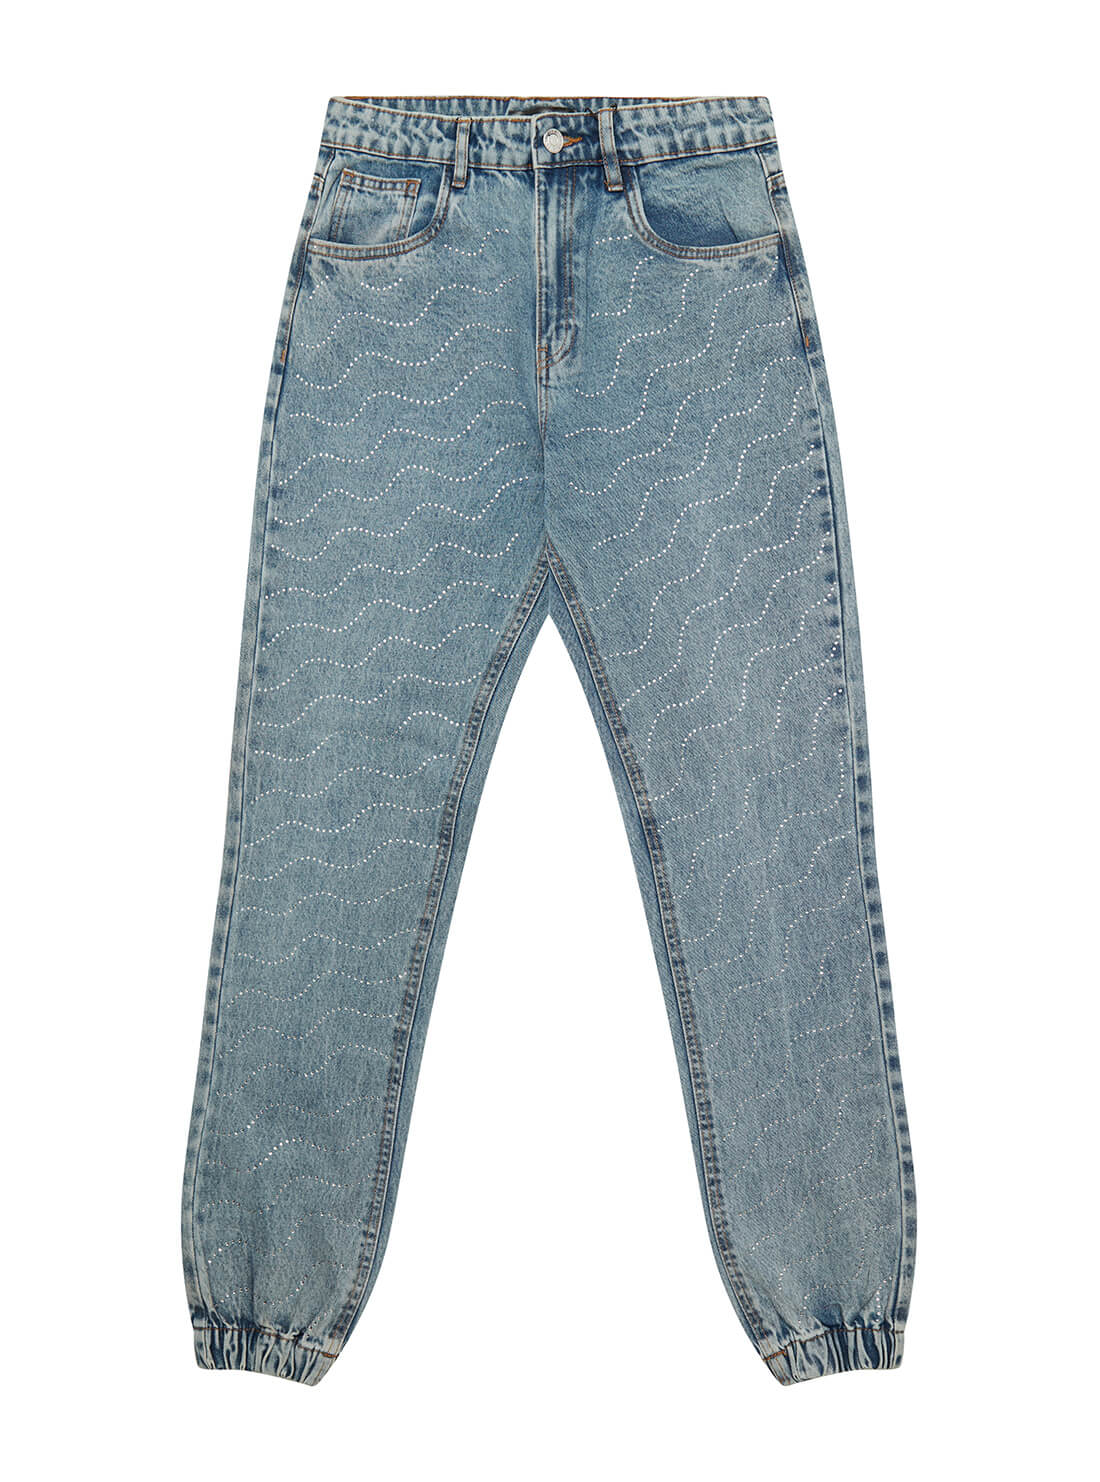 GUESS Big Girls Blue Mum Fit Cargo Denim Jeans (7-16) J1YA12D4G70 Front View